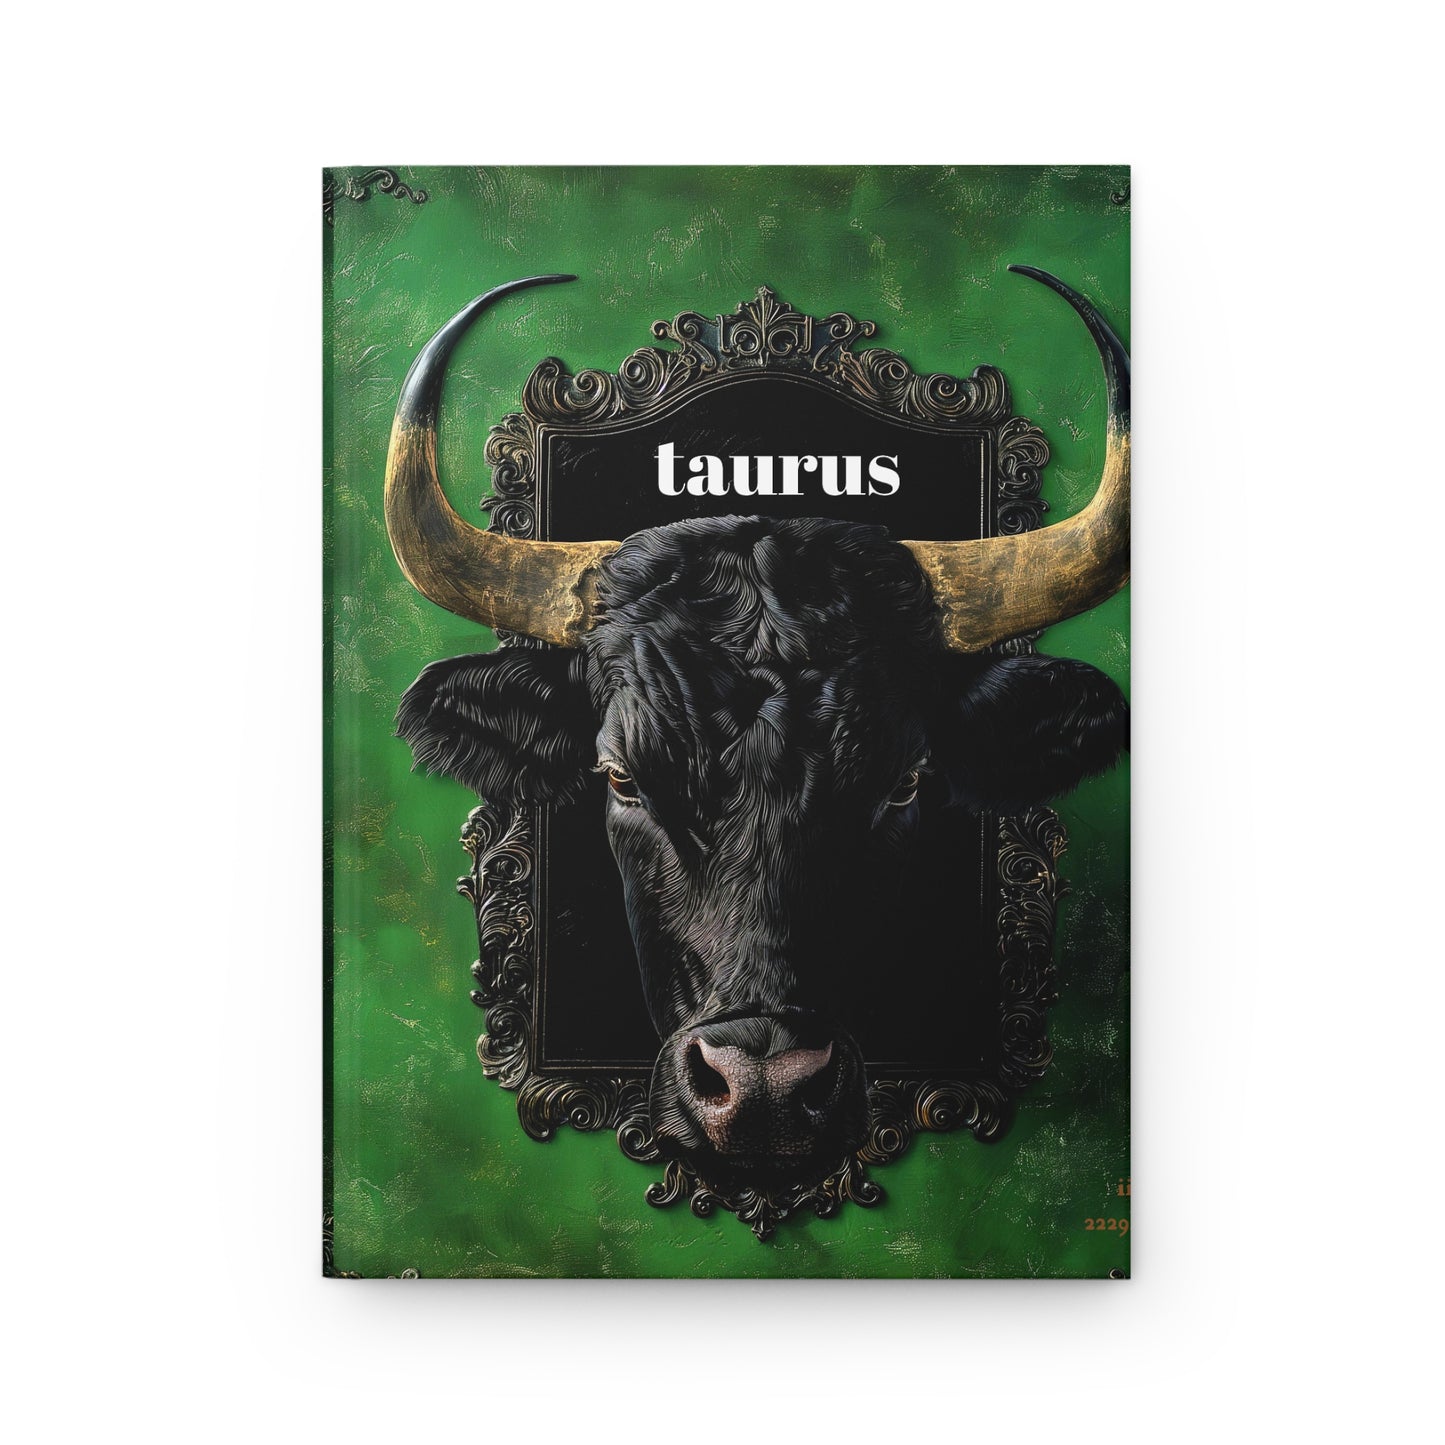 Taurus Sacred Journal #1